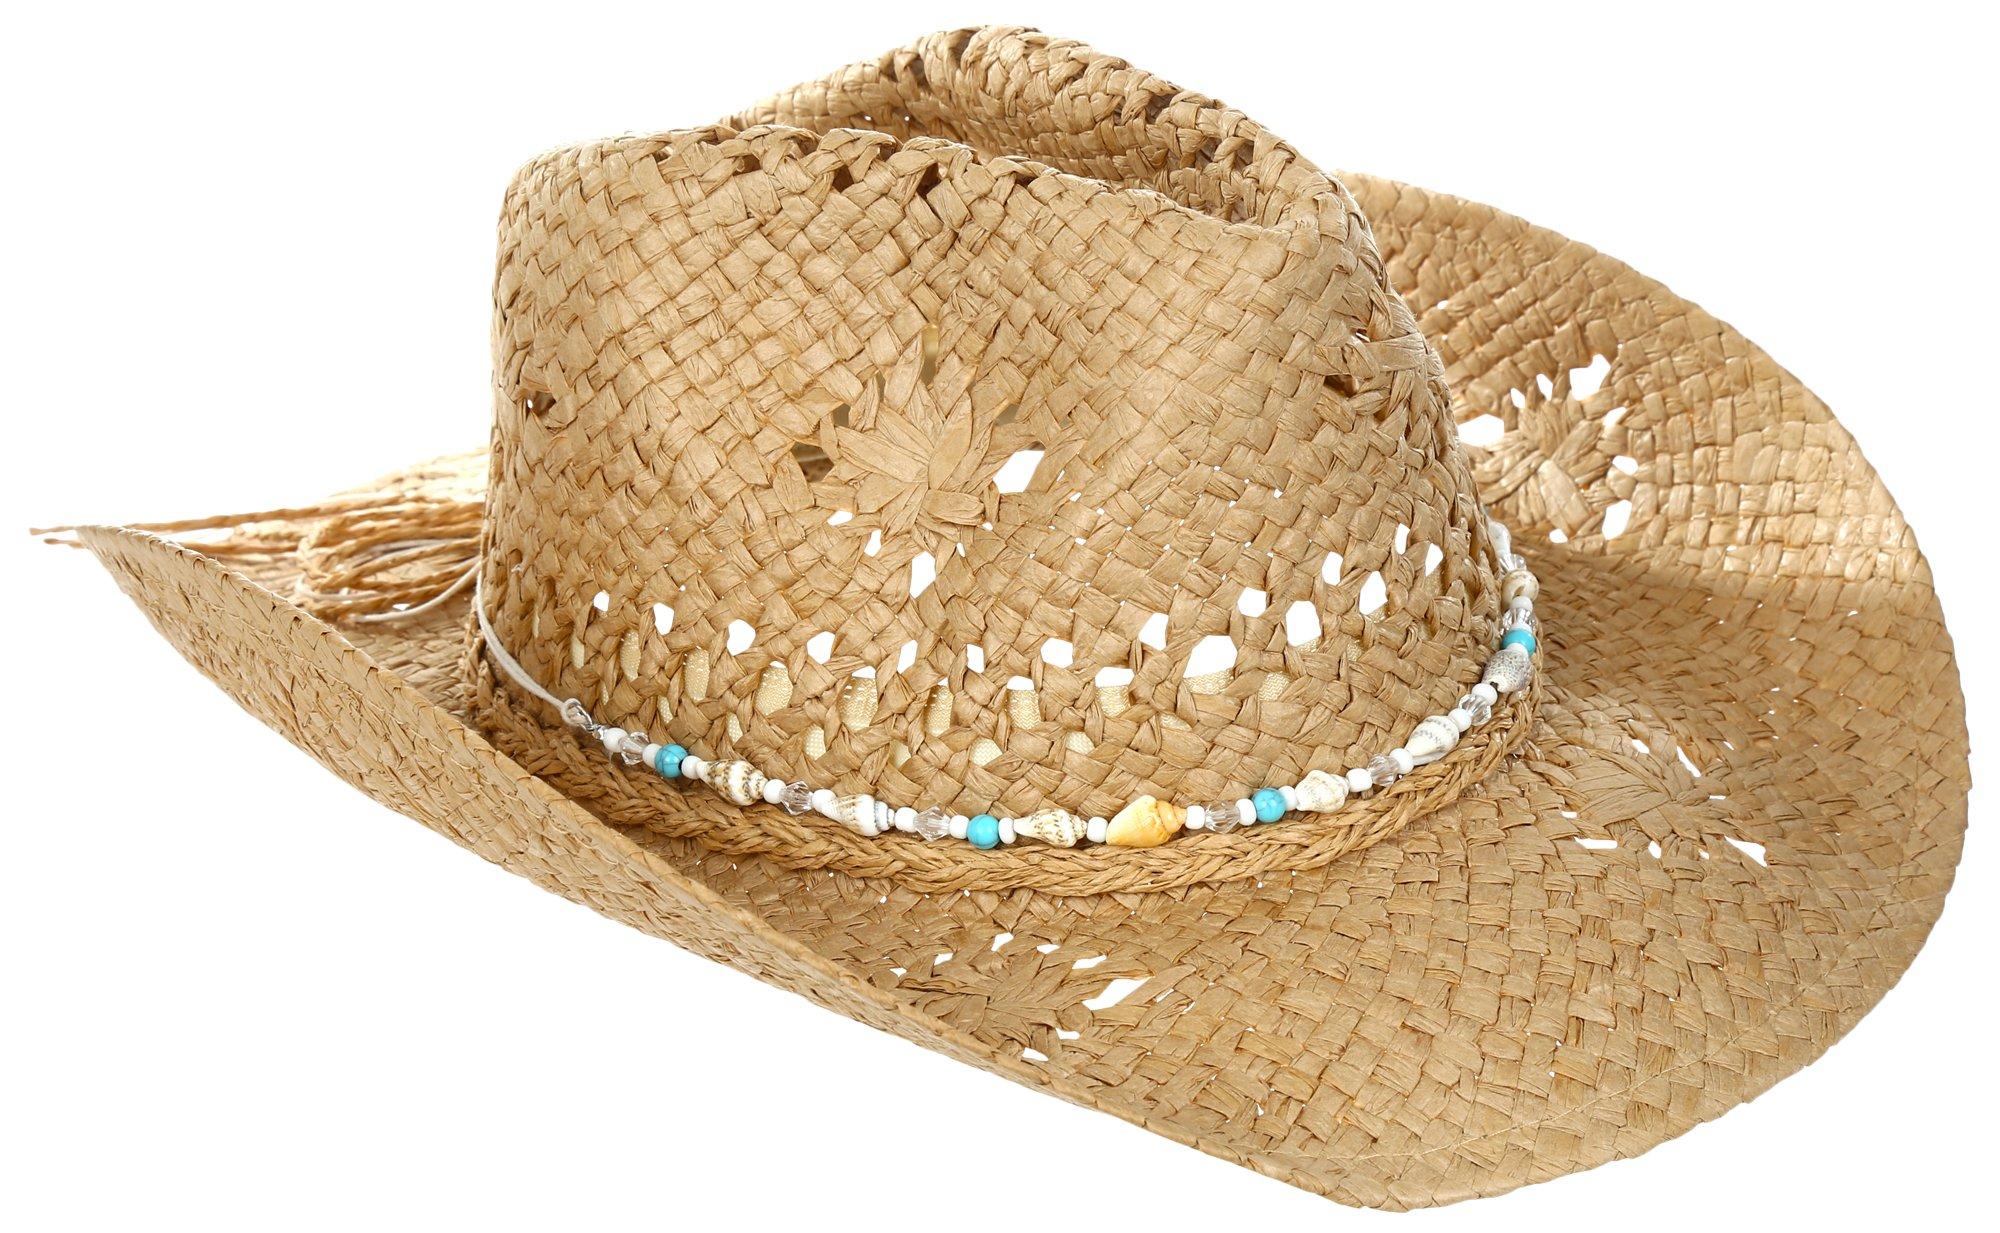 Women's Beaded Straw Cowgirl Hat